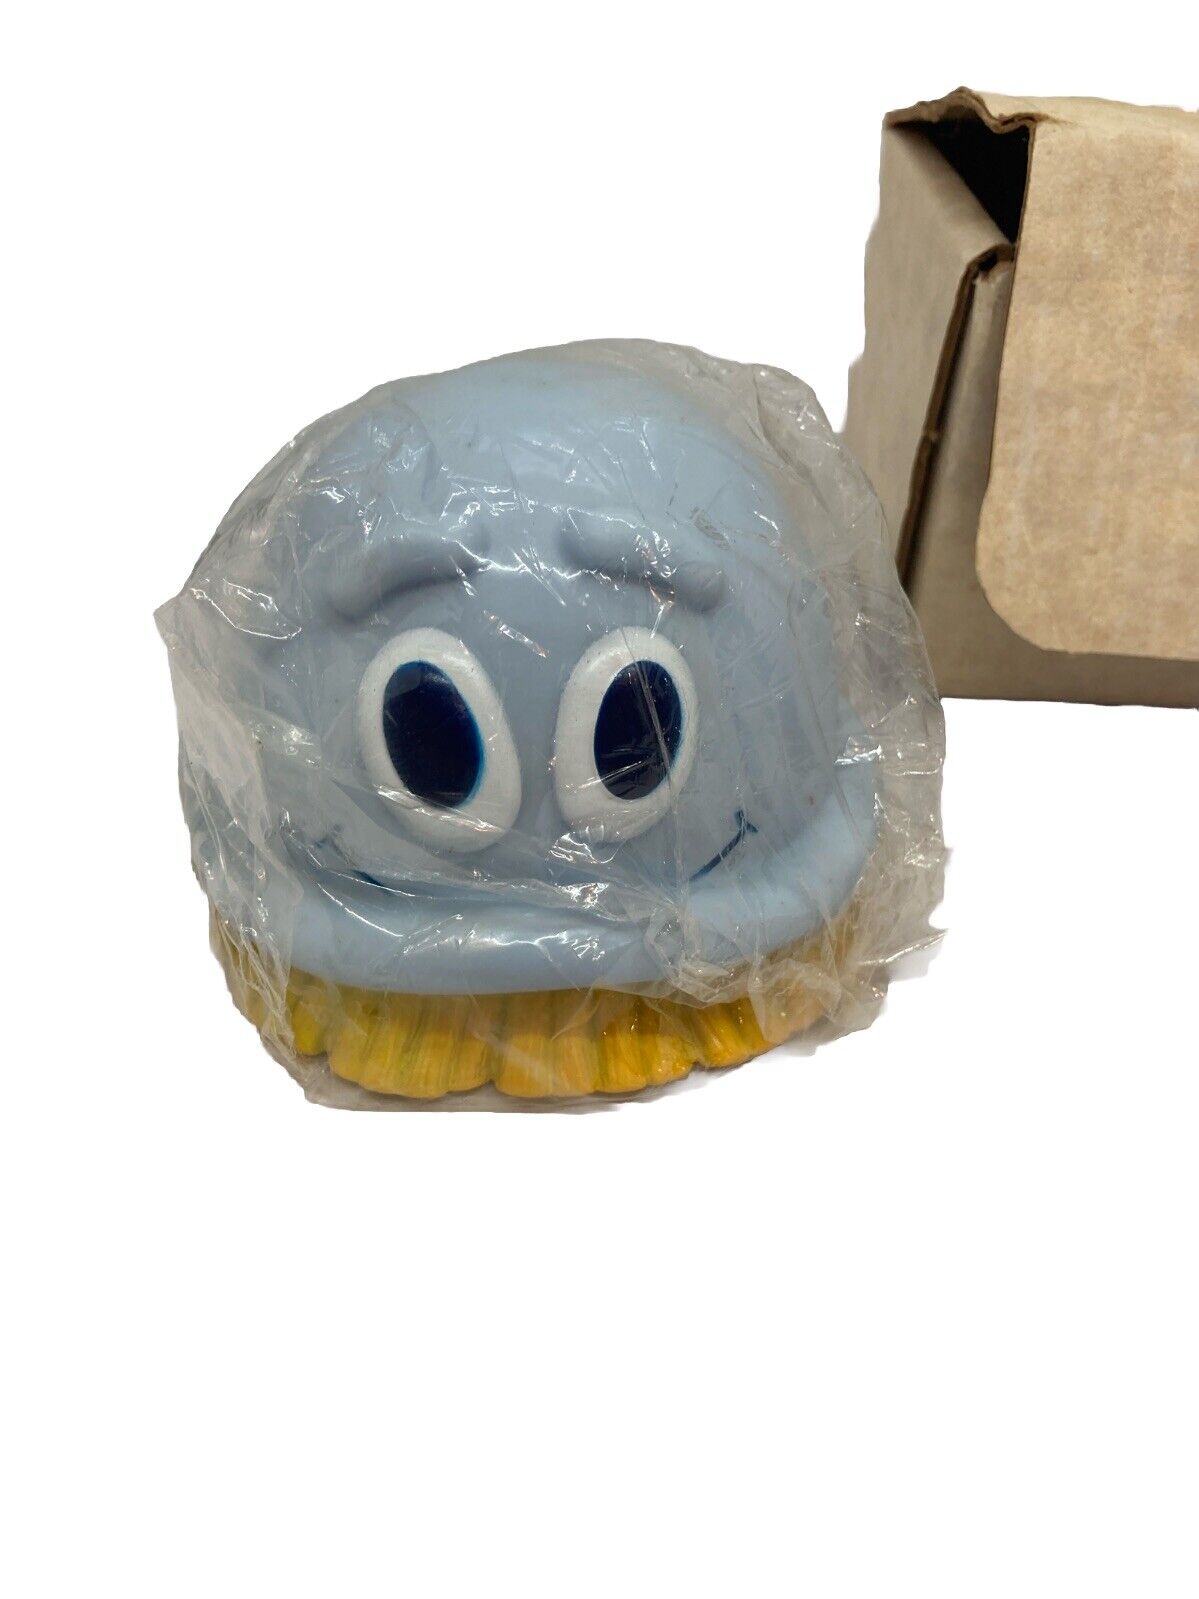 Scrubbing Bubble Bubbles Soap Promotional Squeeze Toy, NEW VTG 1990